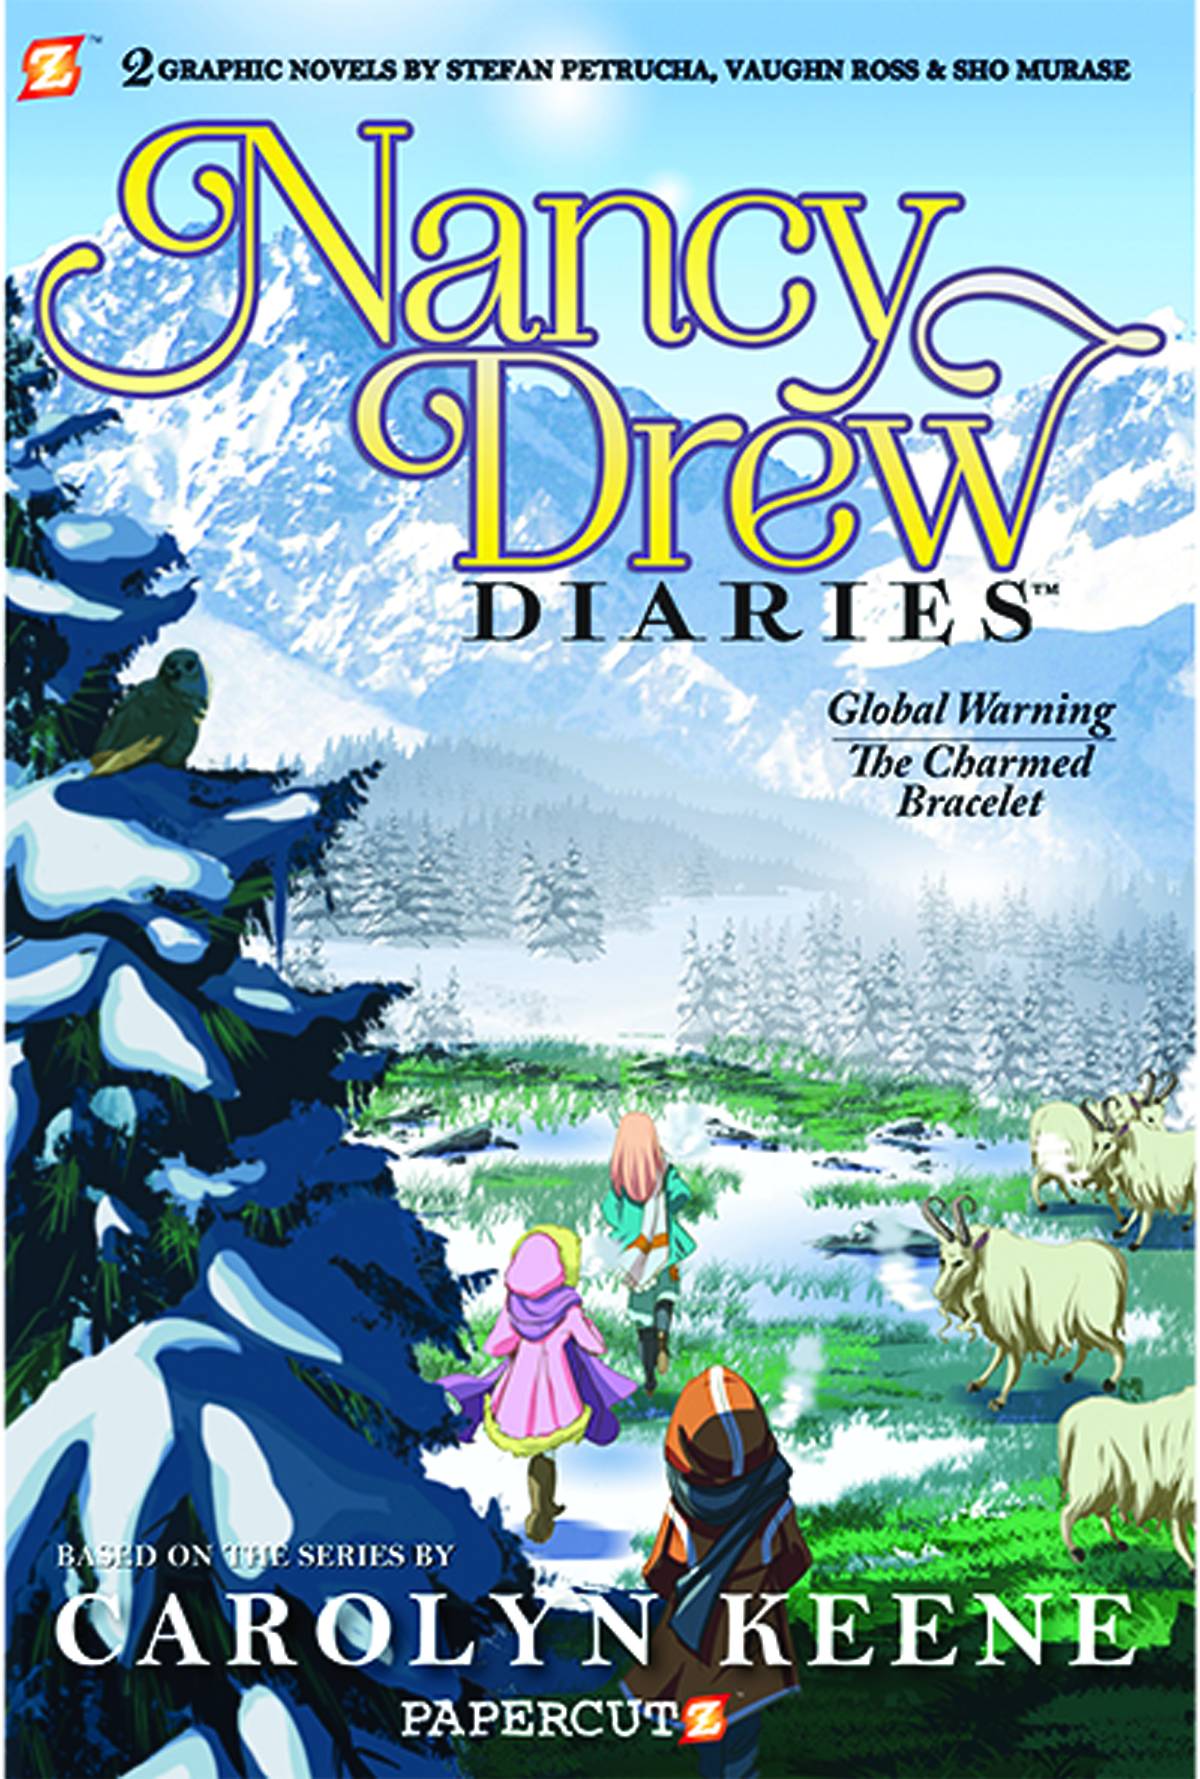 Nancy Drew Diaries Graphic Novel Volume 4